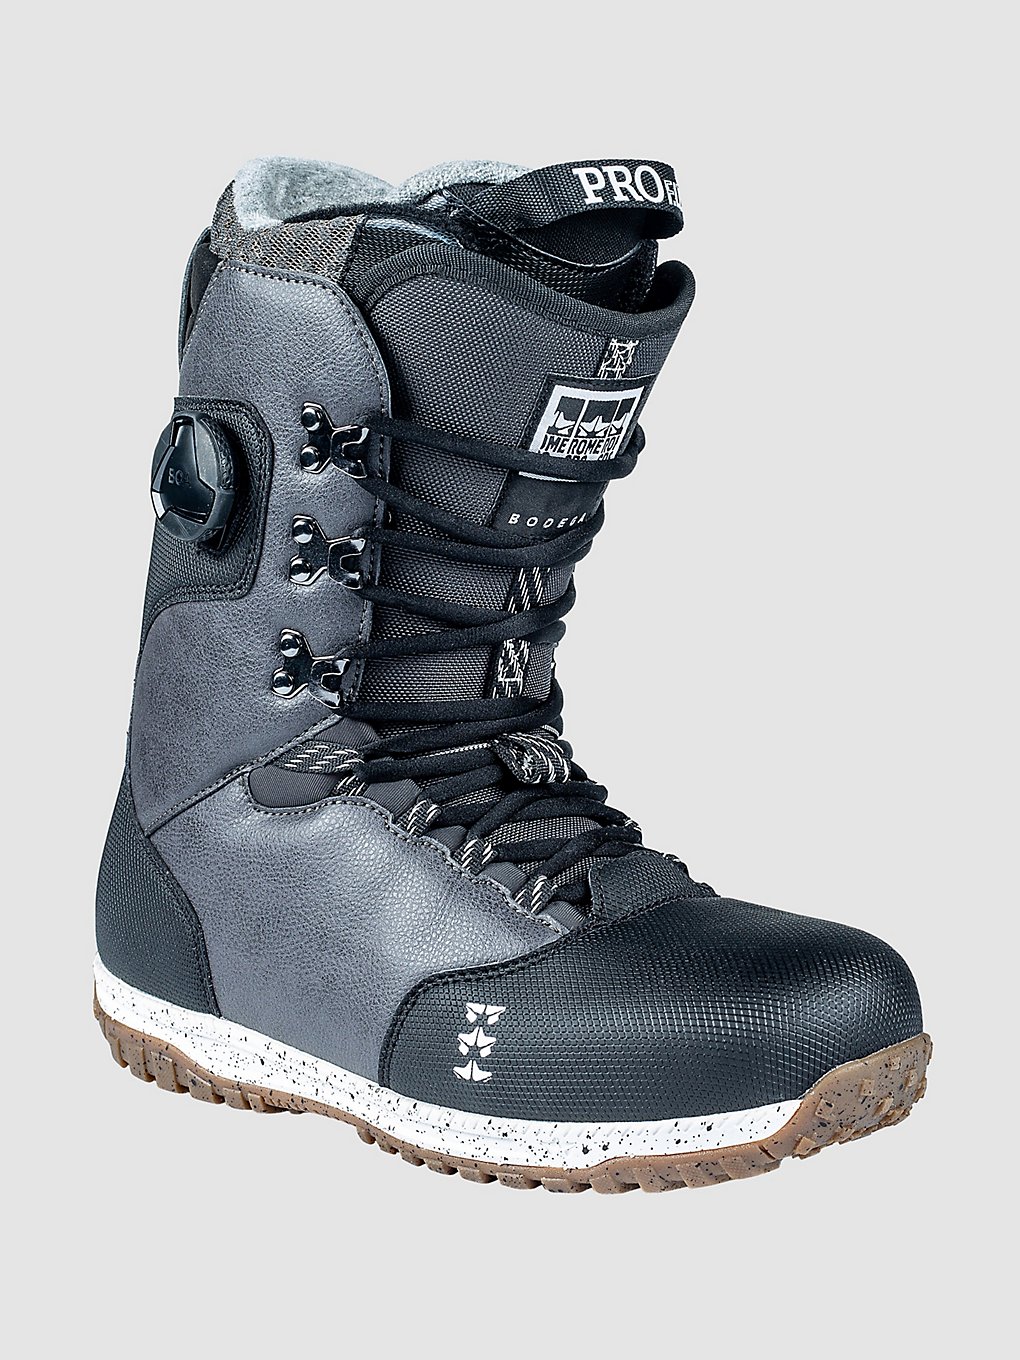 Rome Bodega Hybrid BOA Snowboard-Boots black kaufen